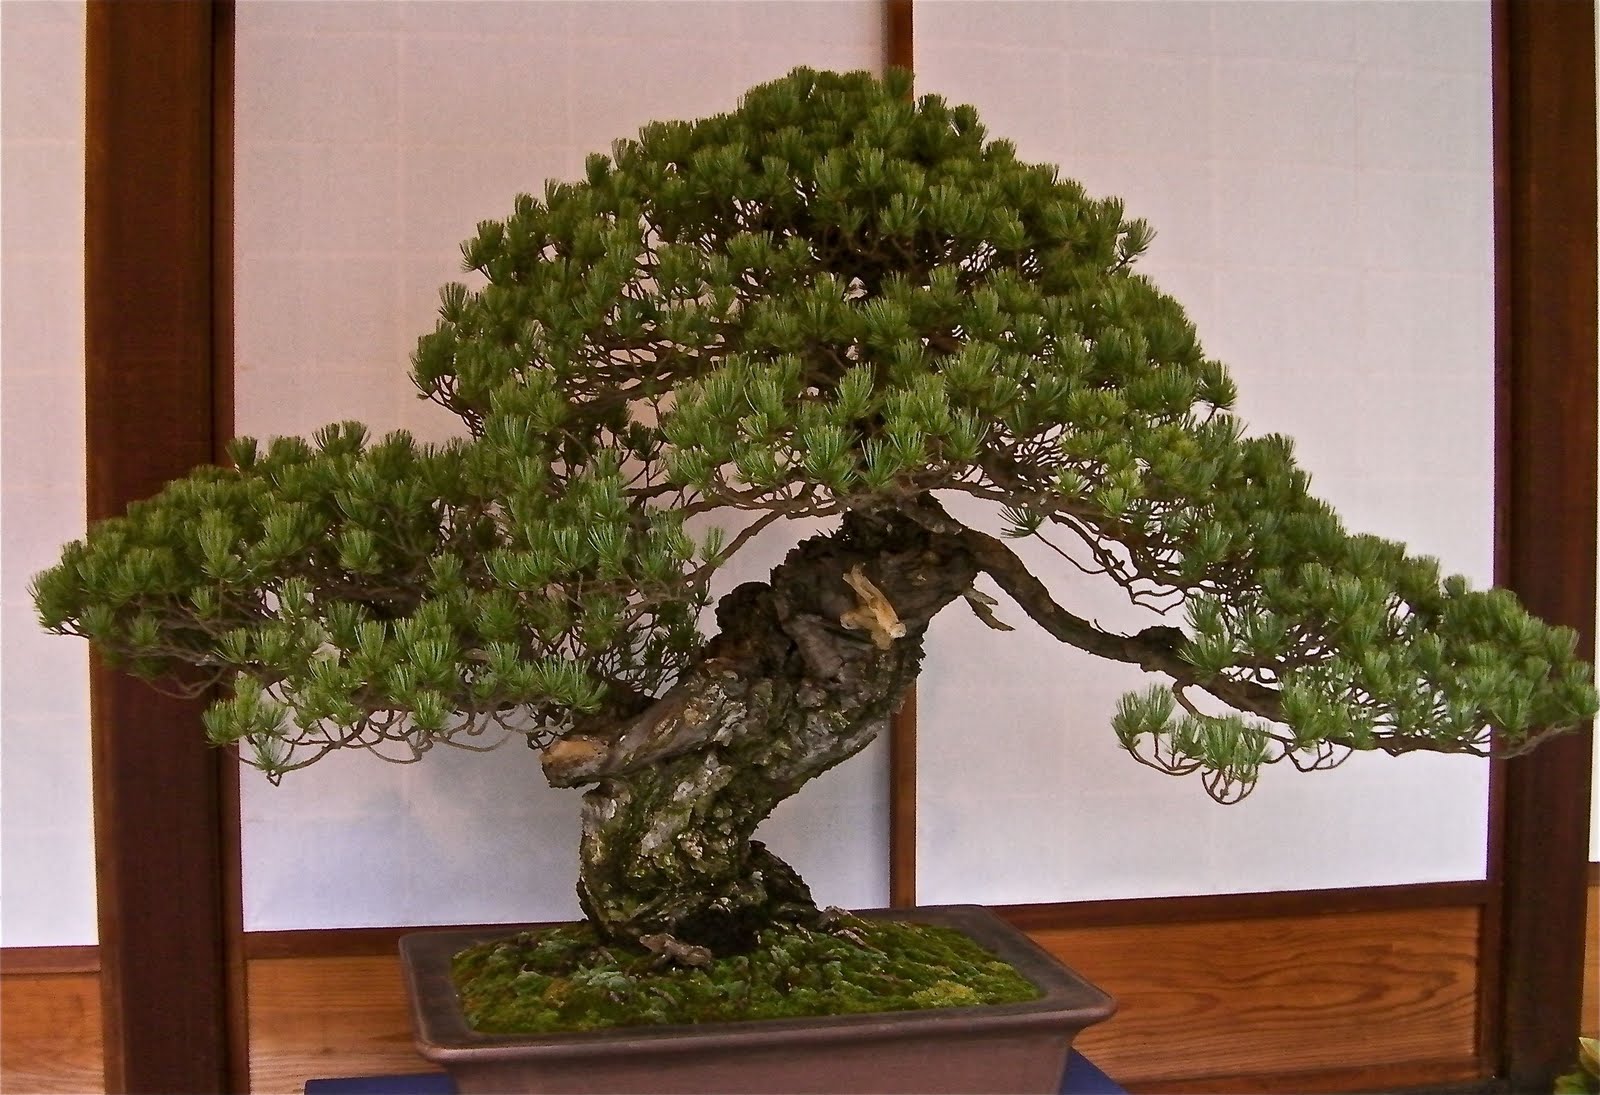 Tokugawa Iemitsu's Pine